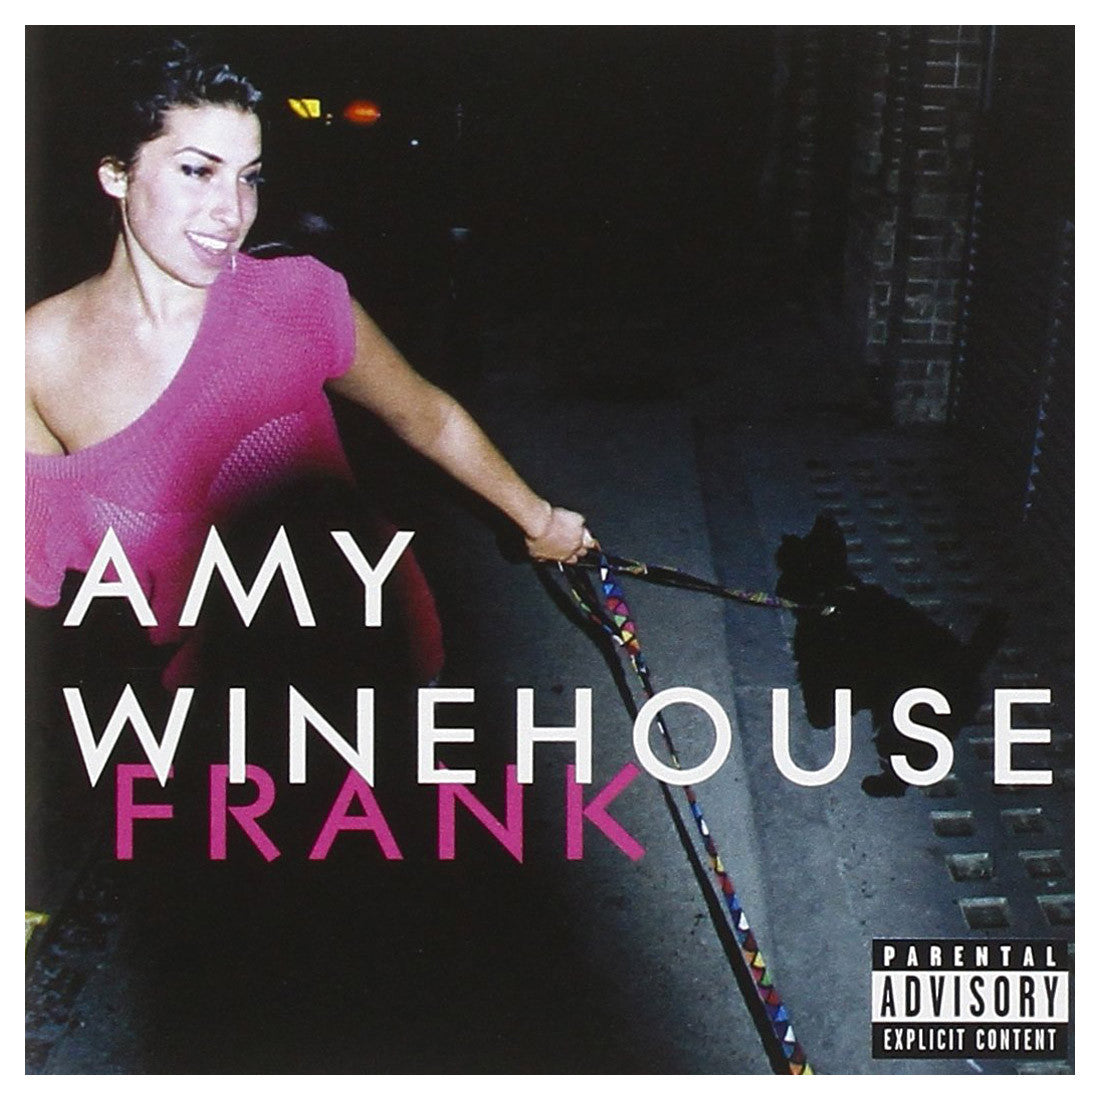 AMY WINEHOUSE – FRANK – LP - 180g Vinyl Remastered